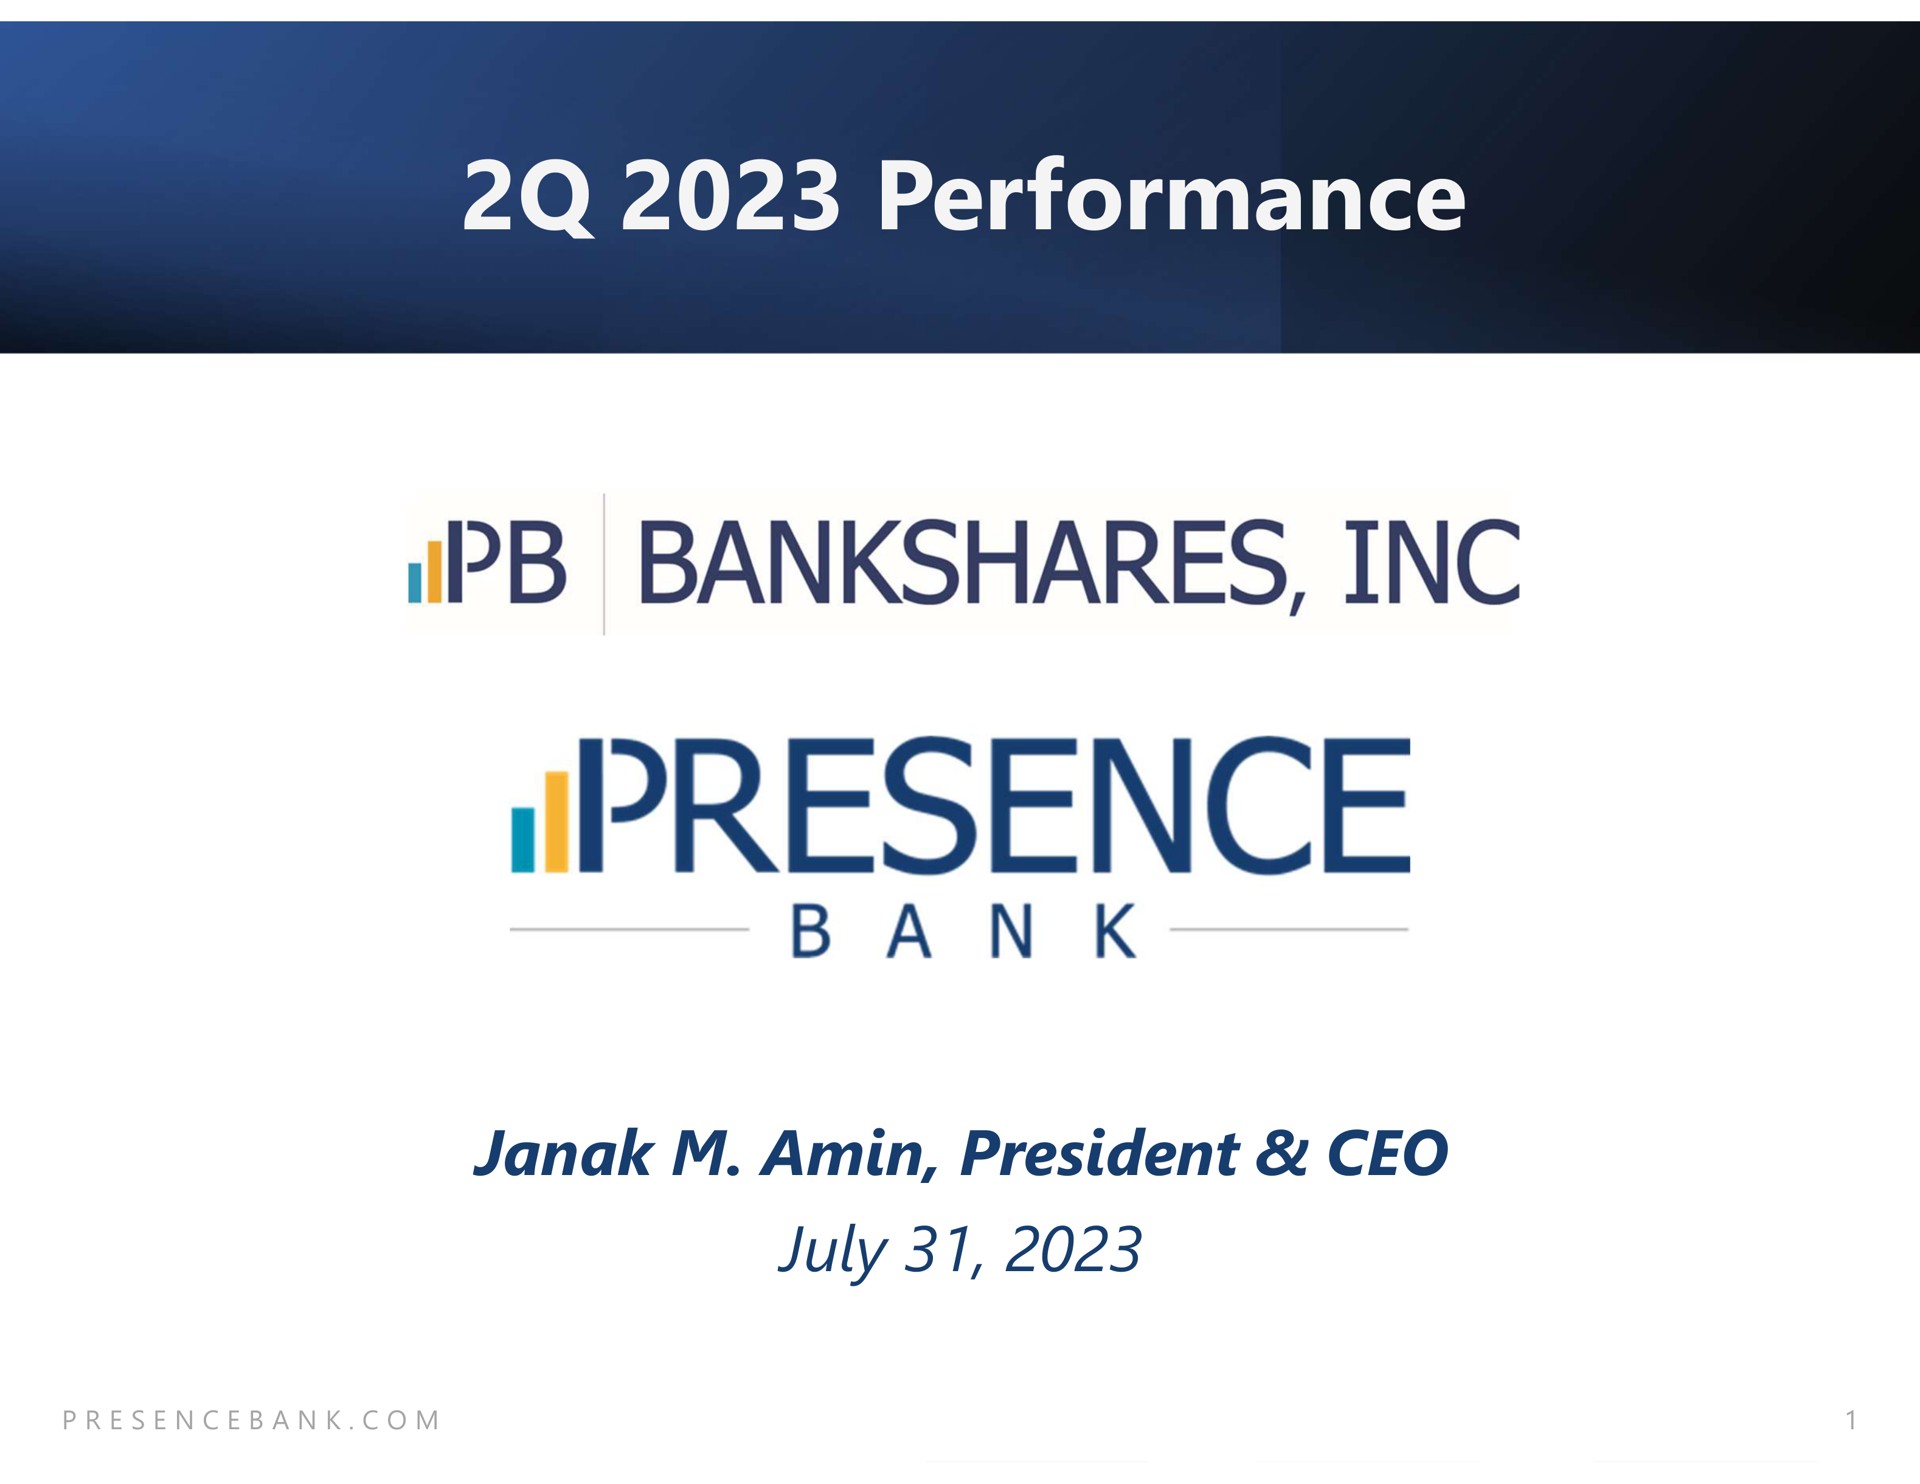 performance presence ban | PB Bankshares